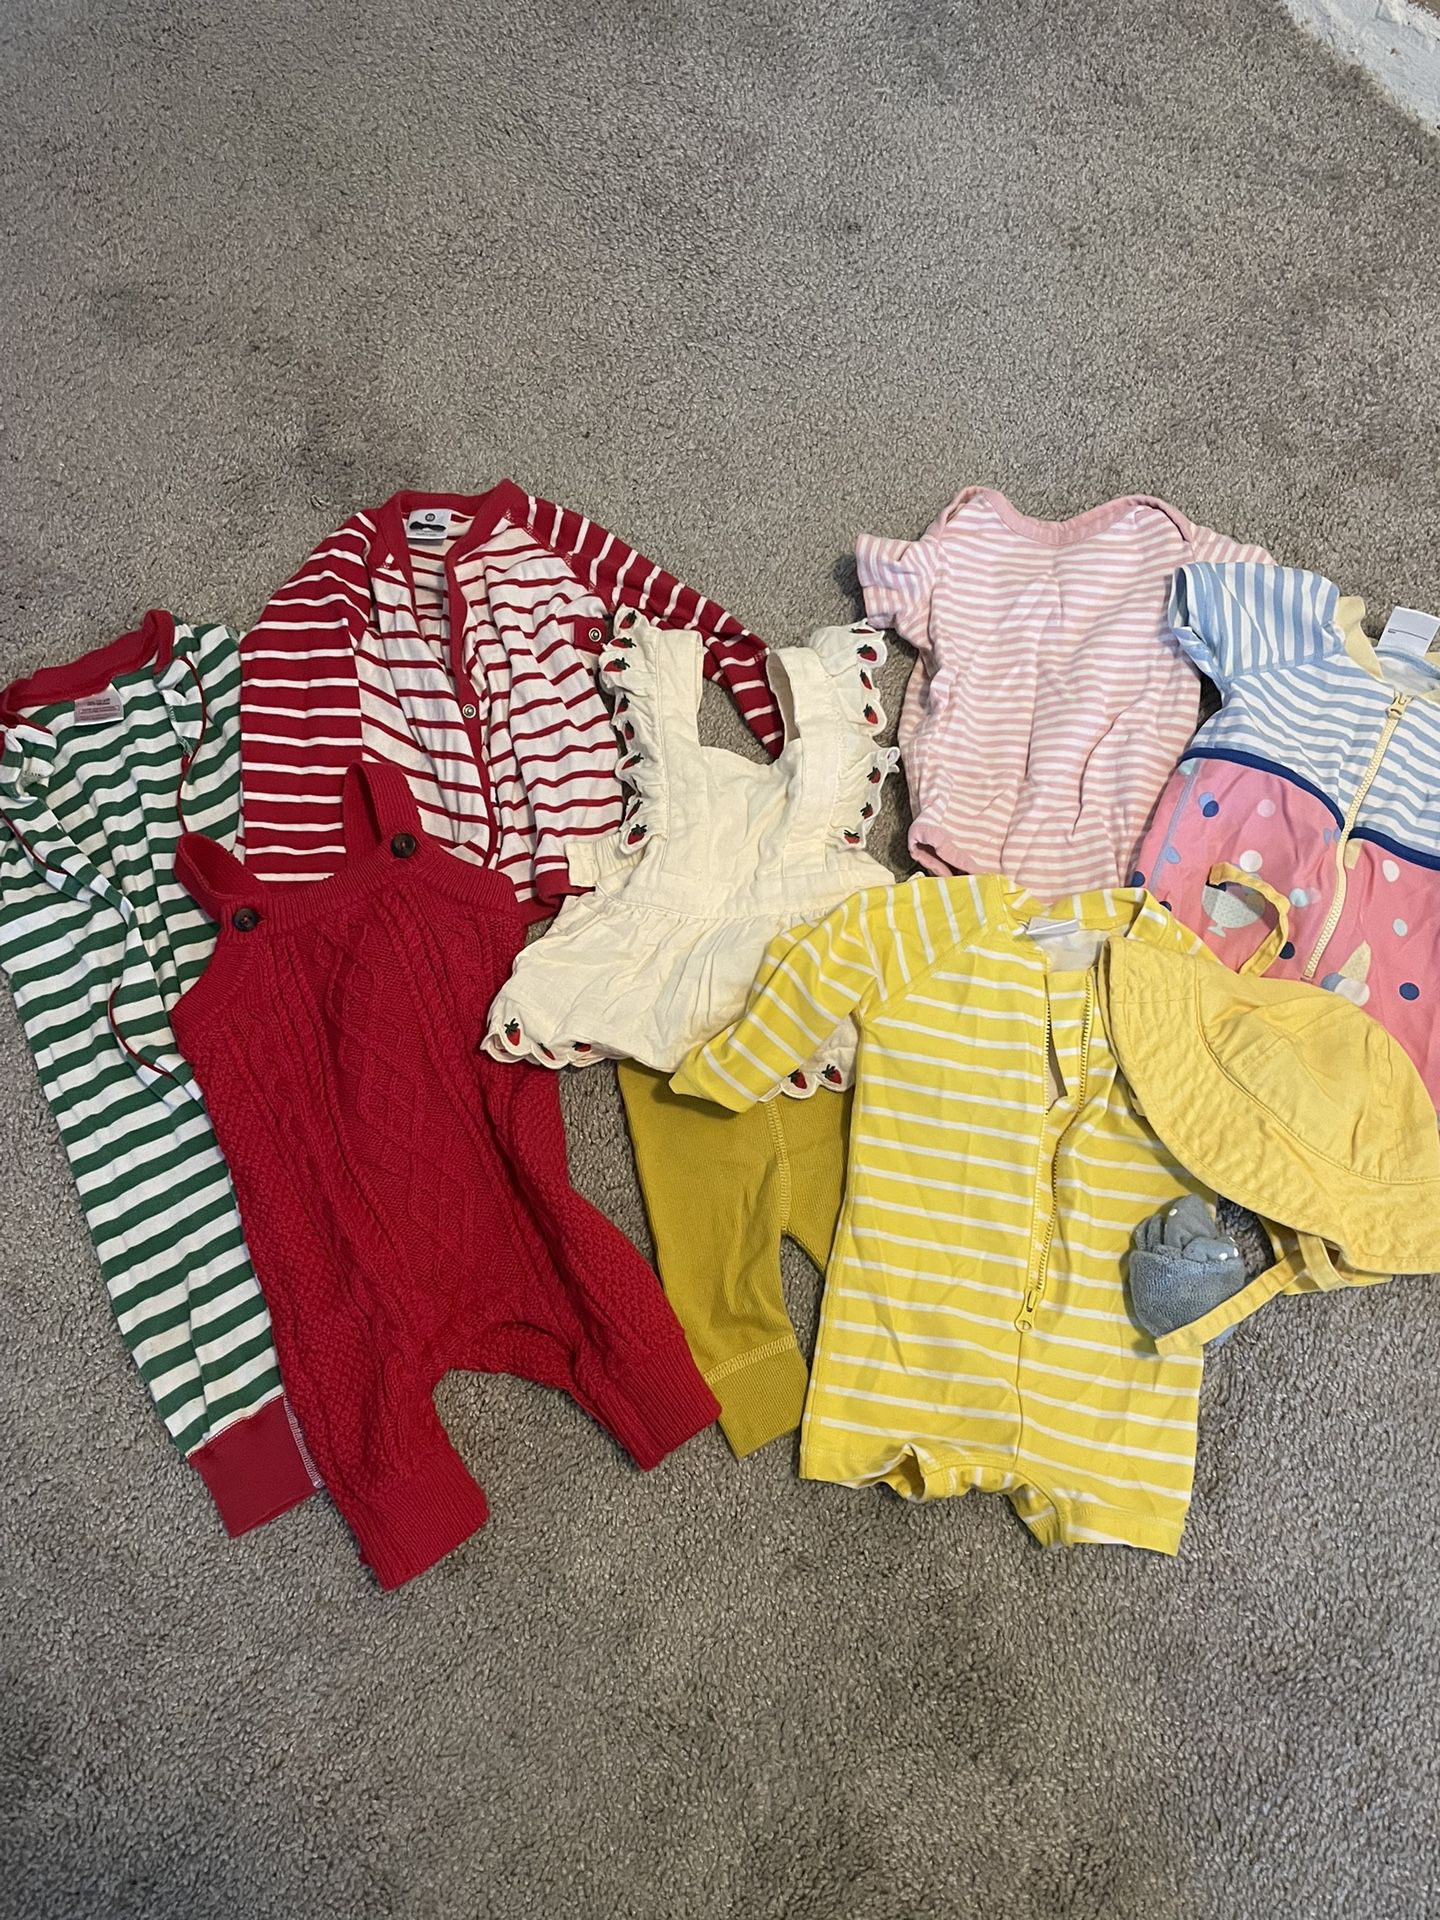 Hanna Andersson Baby Clothes Bundle